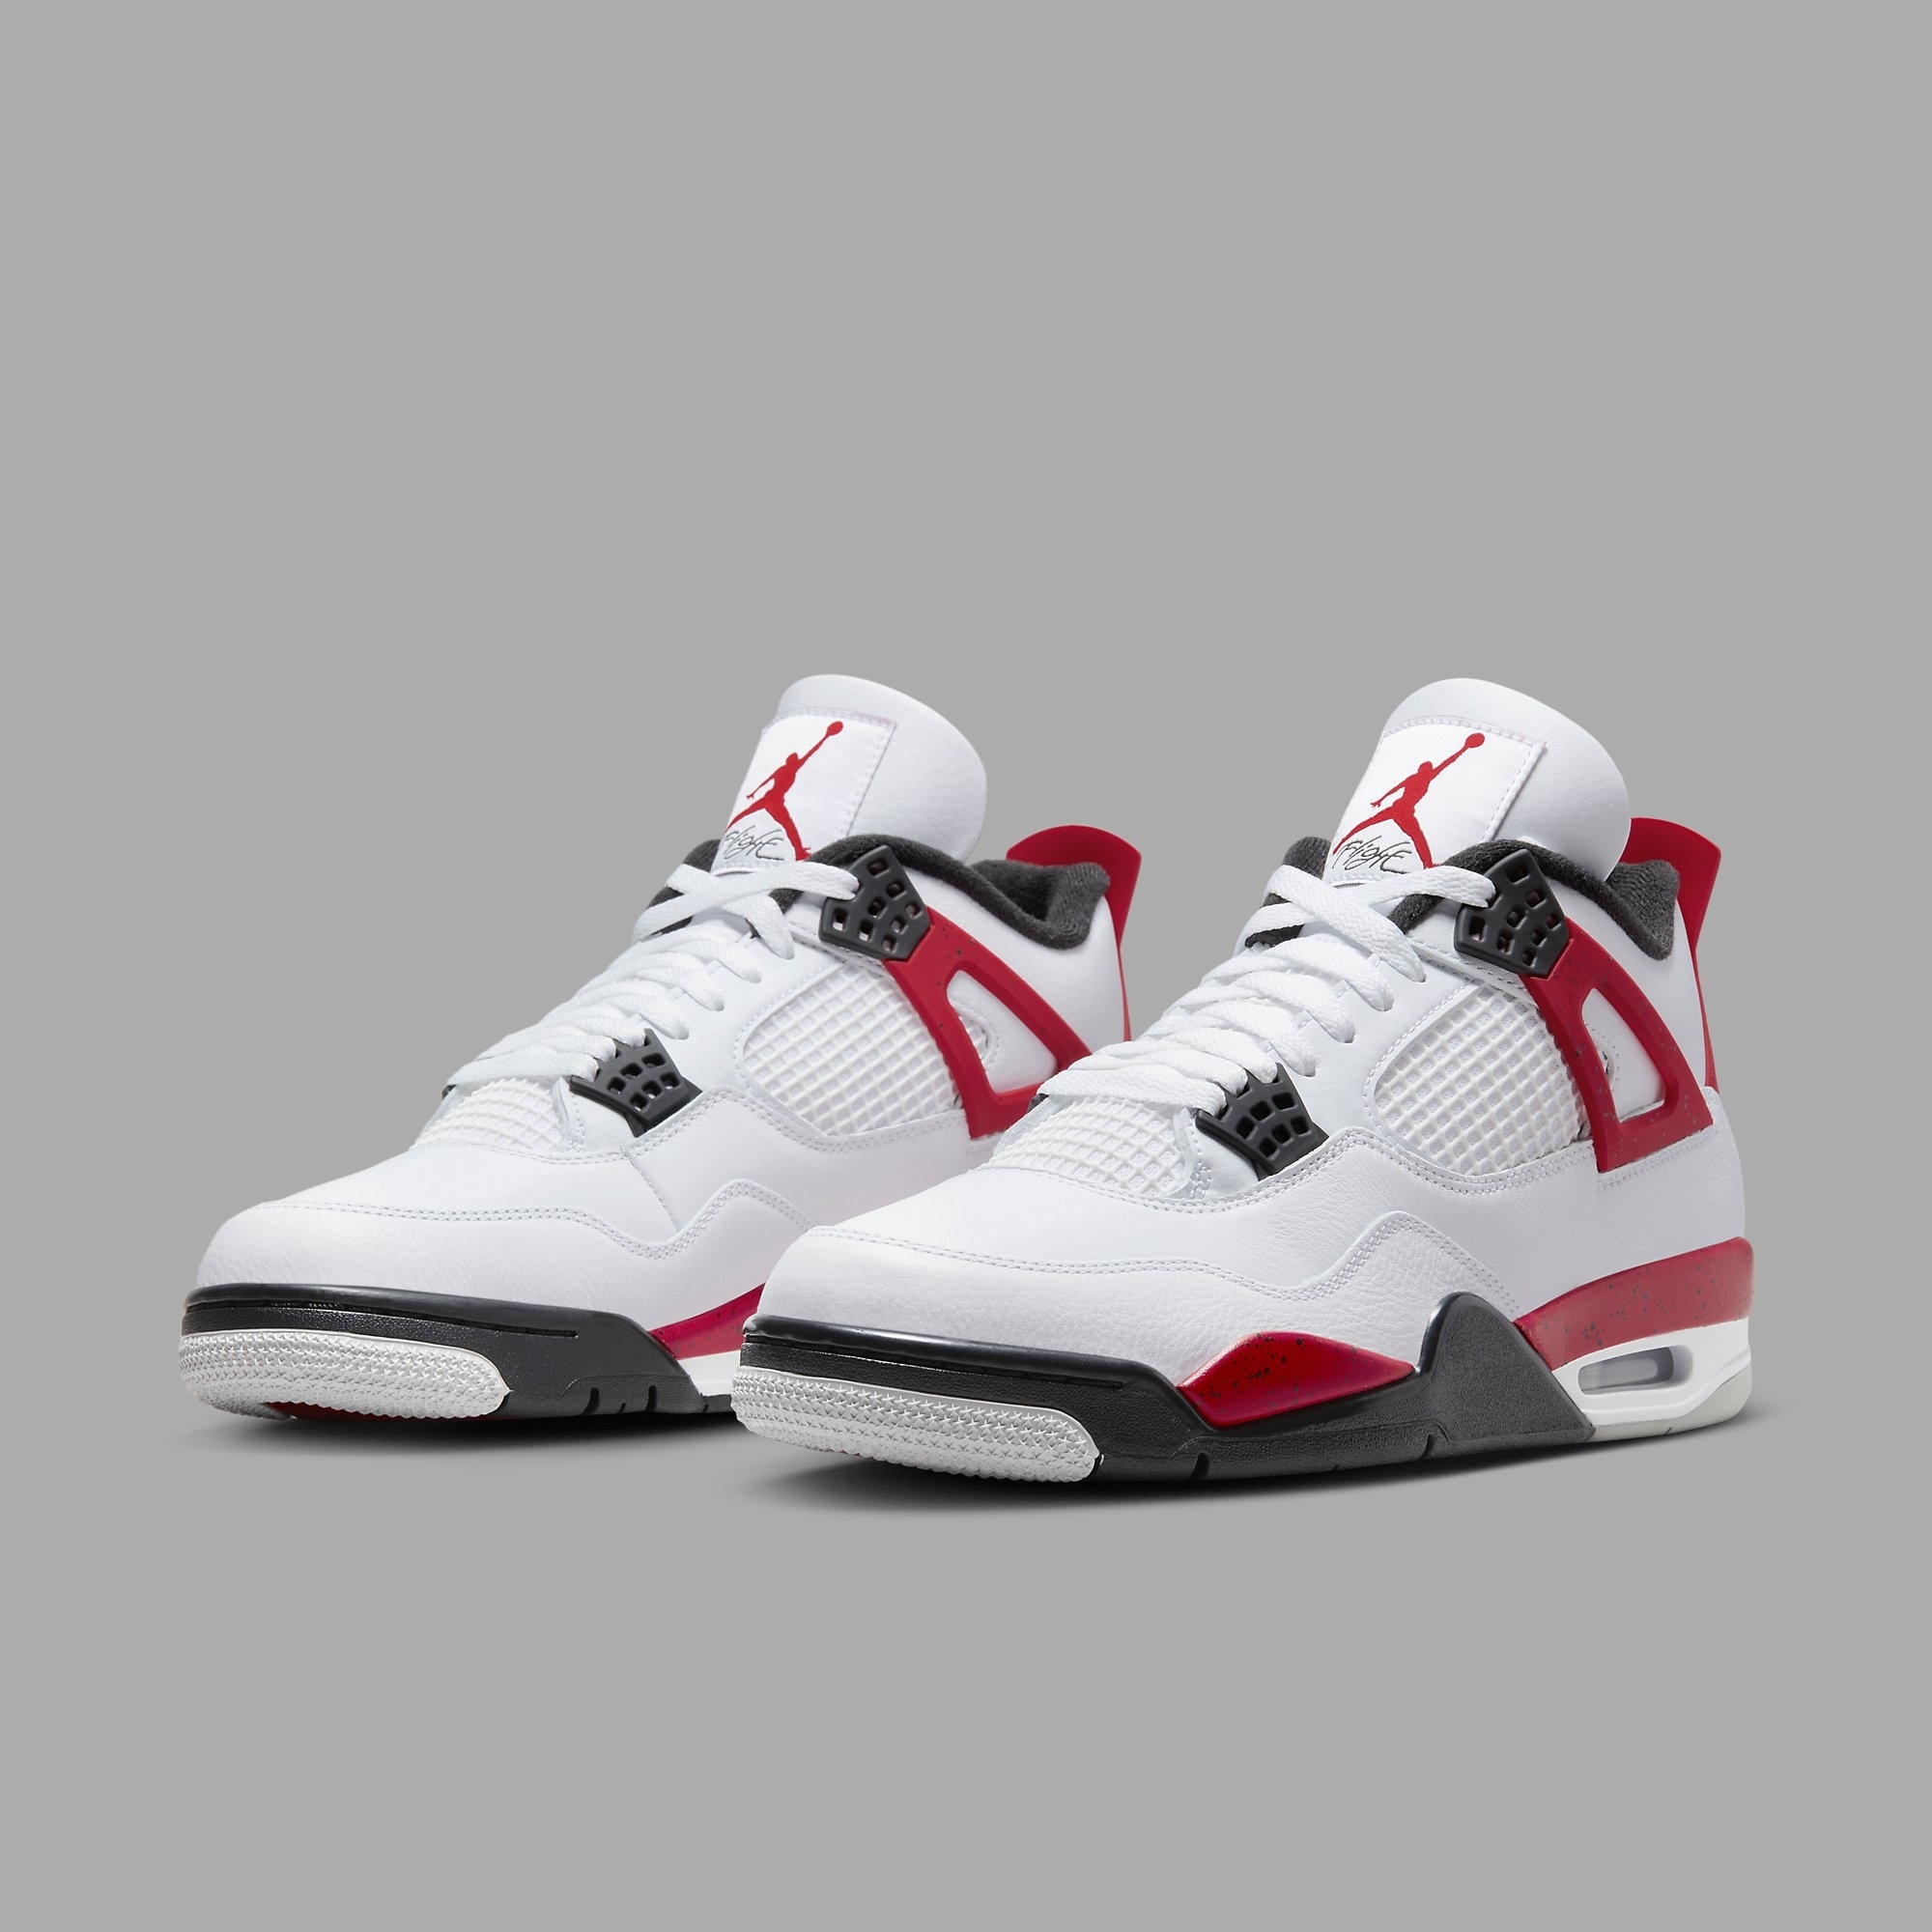 Air Jordan 4 Flight Nostalgia On Feet Sneaker Review | Red nike shoes,  Retro basketball shoes, Jordan shoes retro